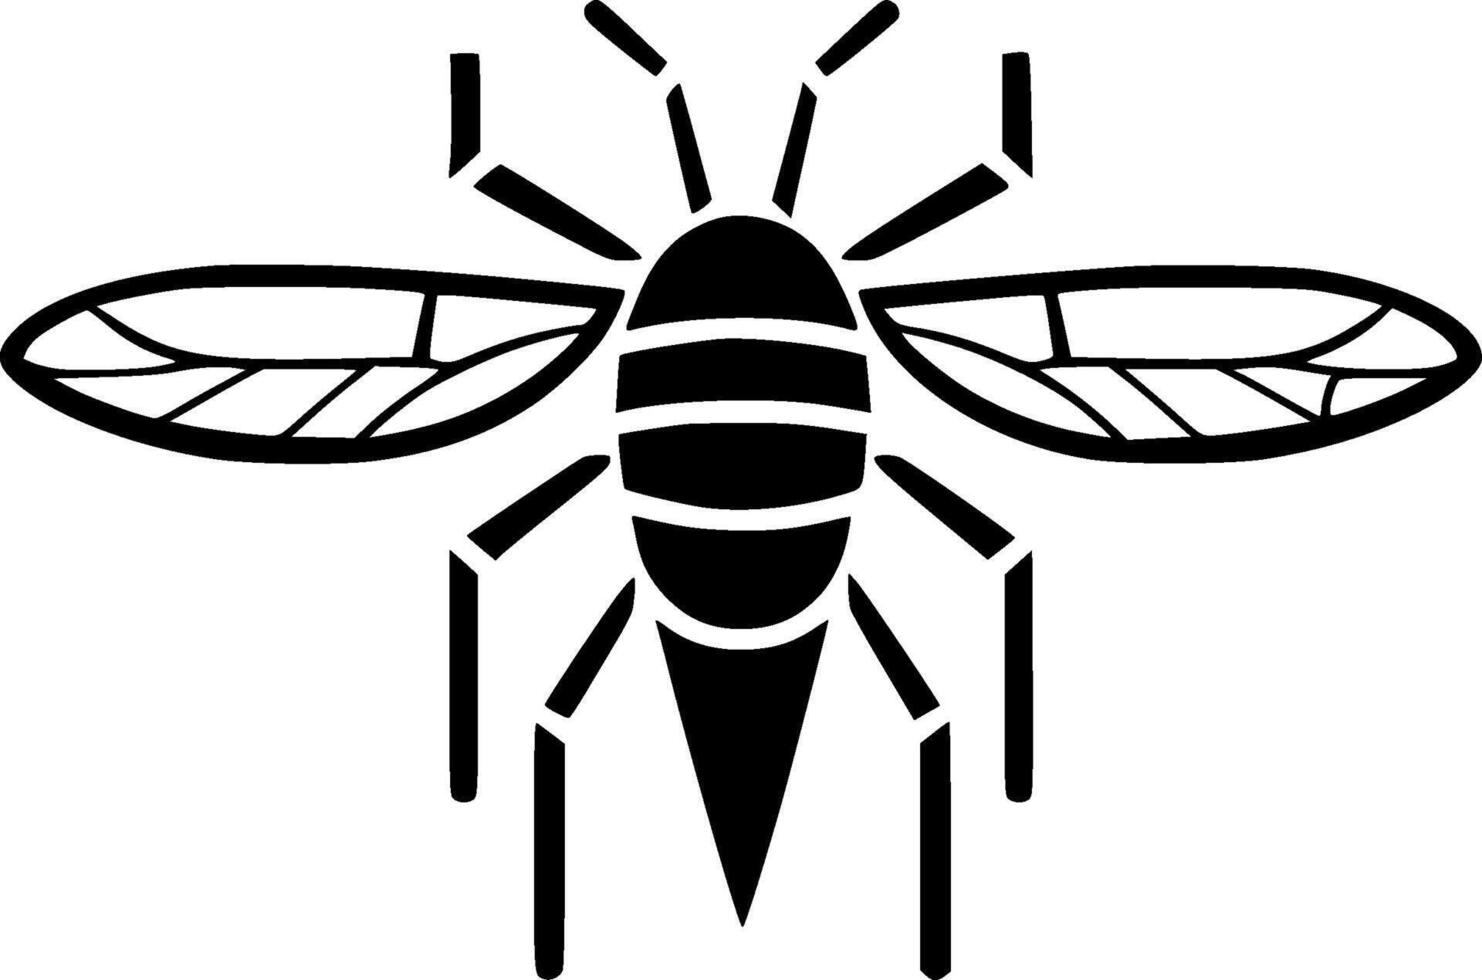 Mosquito - Minimalist and Flat Logo - Vector illustration